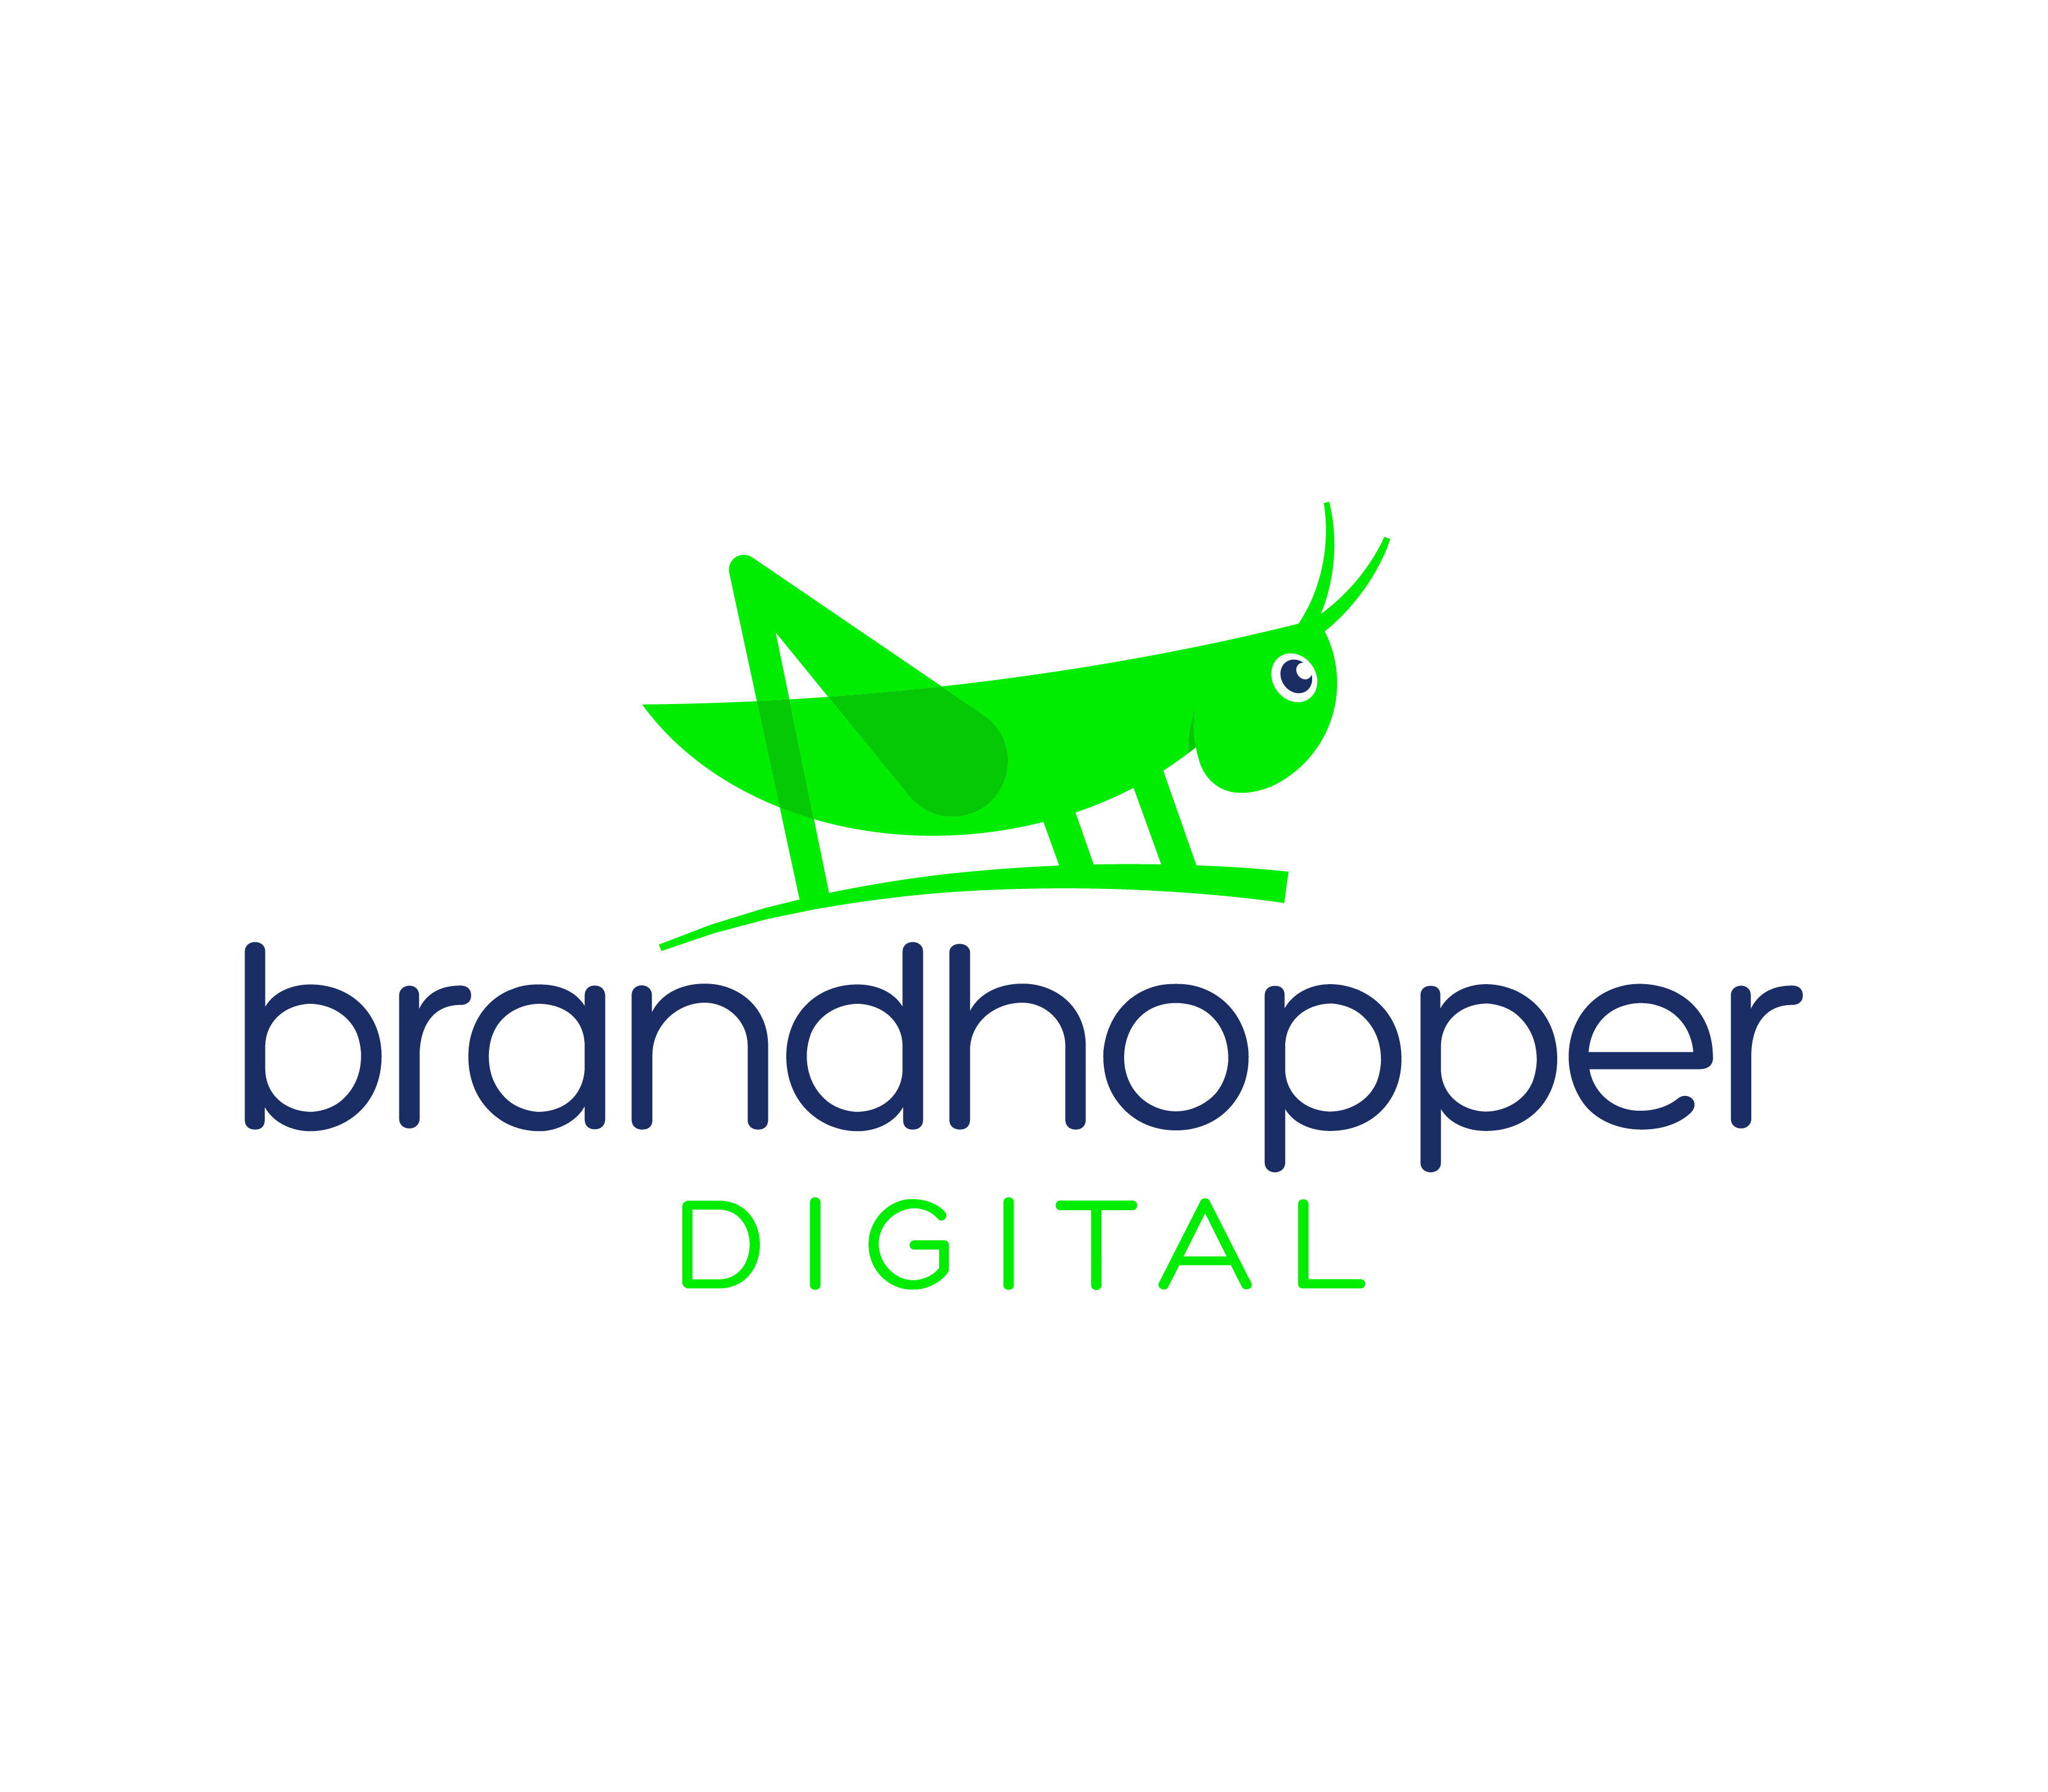 Marketing Strategies Of Home Depot - The Brand Hopper